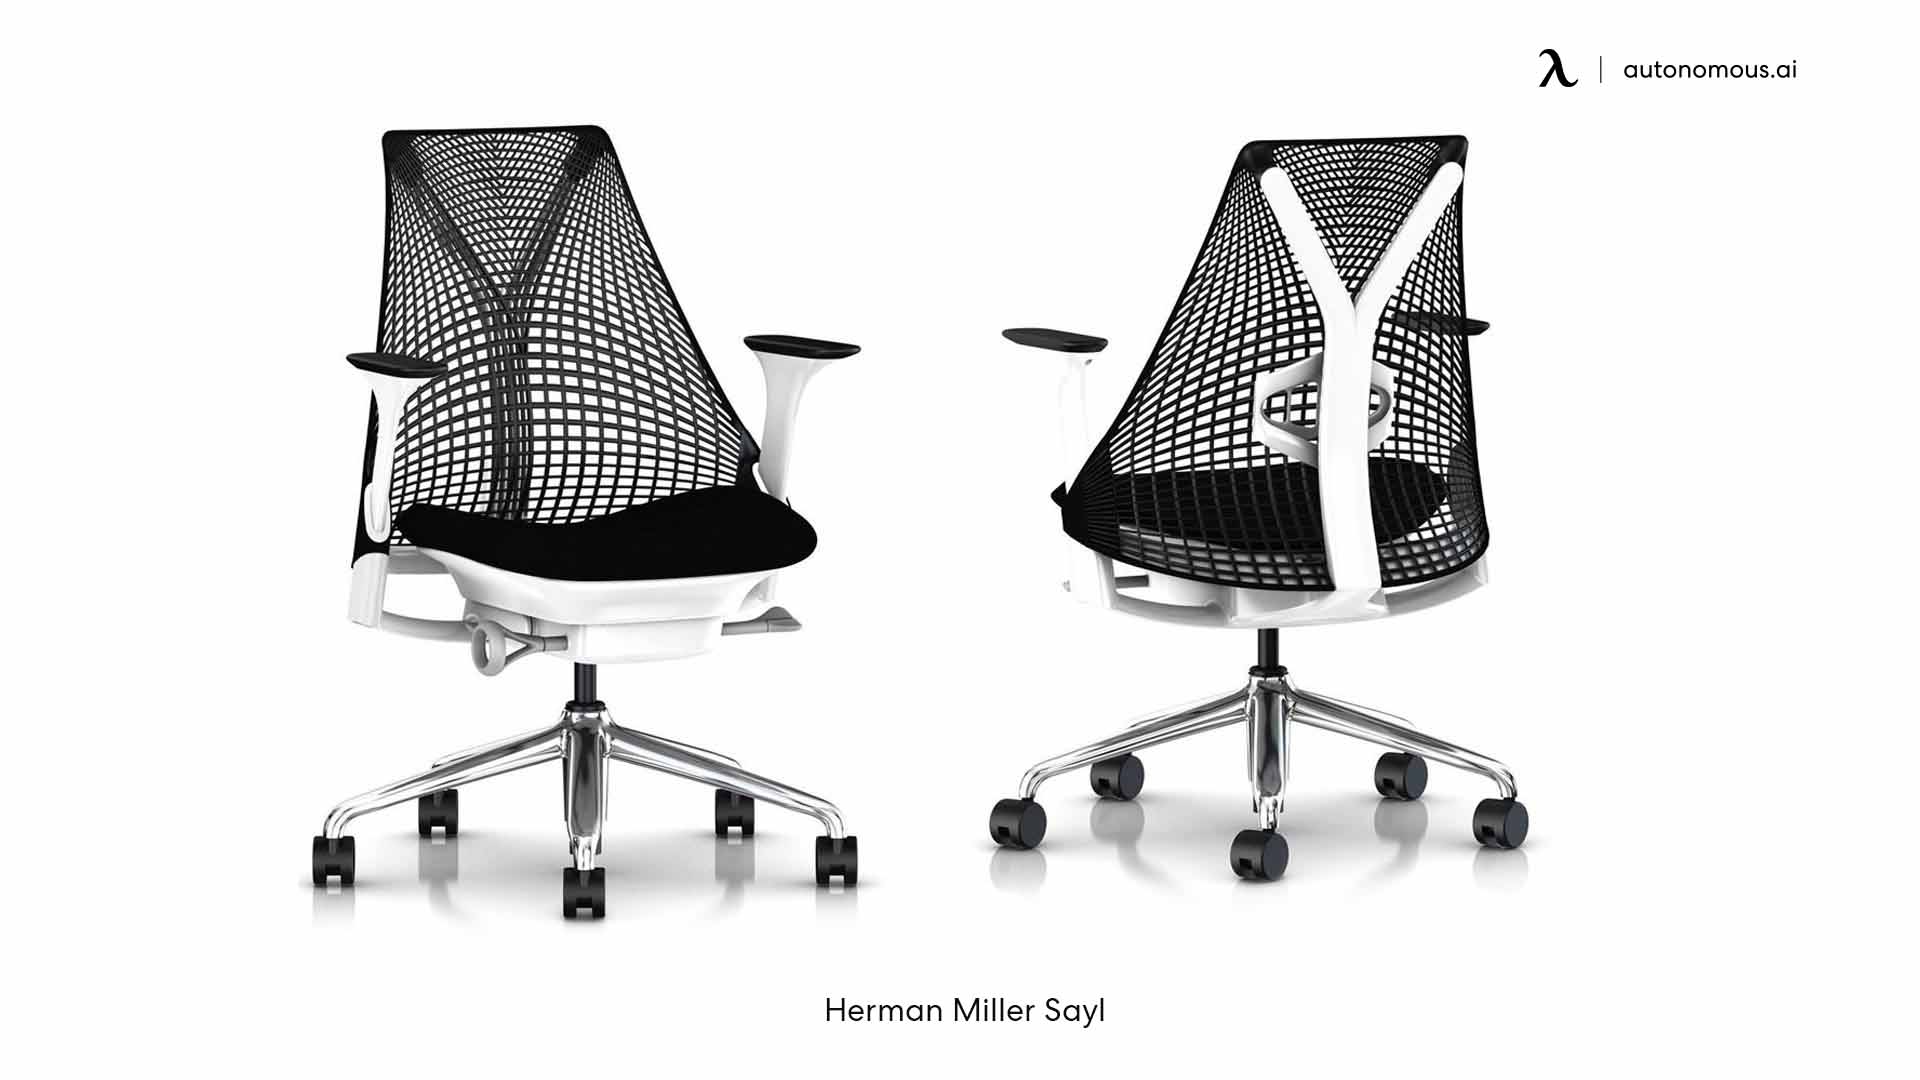 Herman Miller Sayl trendy desk chair